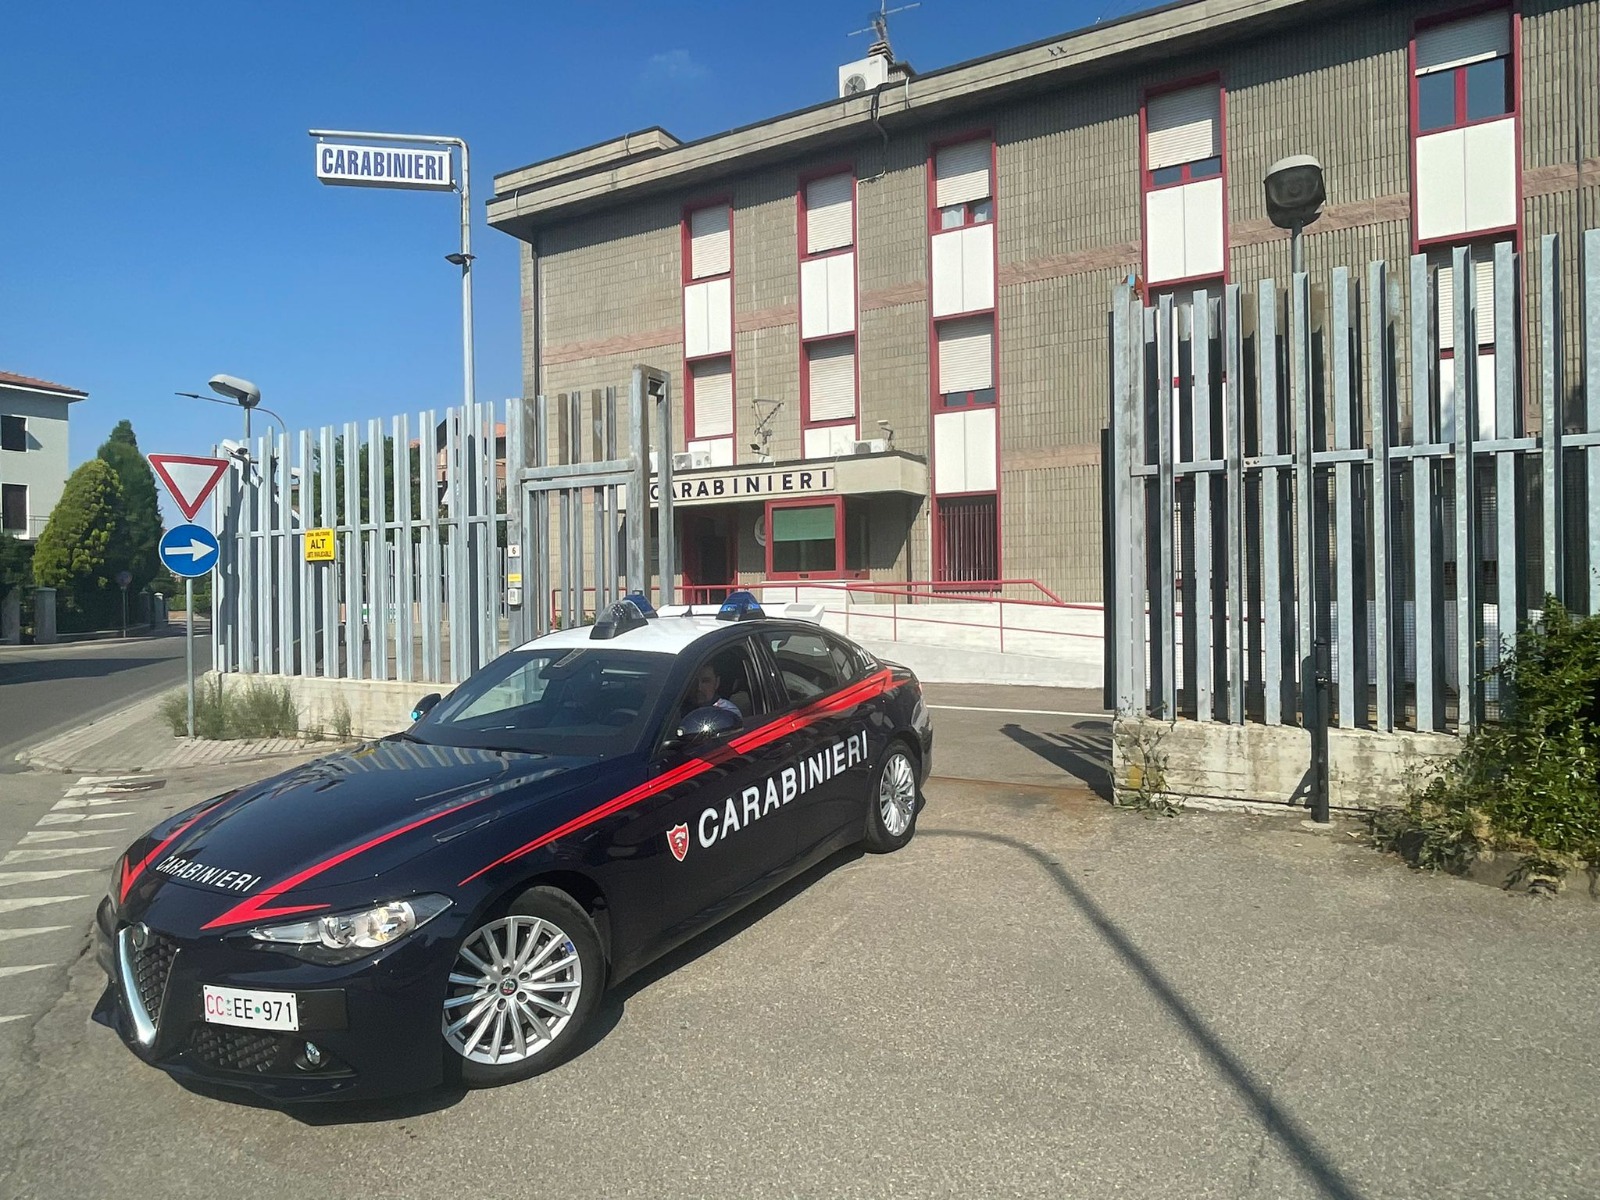  San Prospero / I Carabinieri arrestano un 39enne per evasione